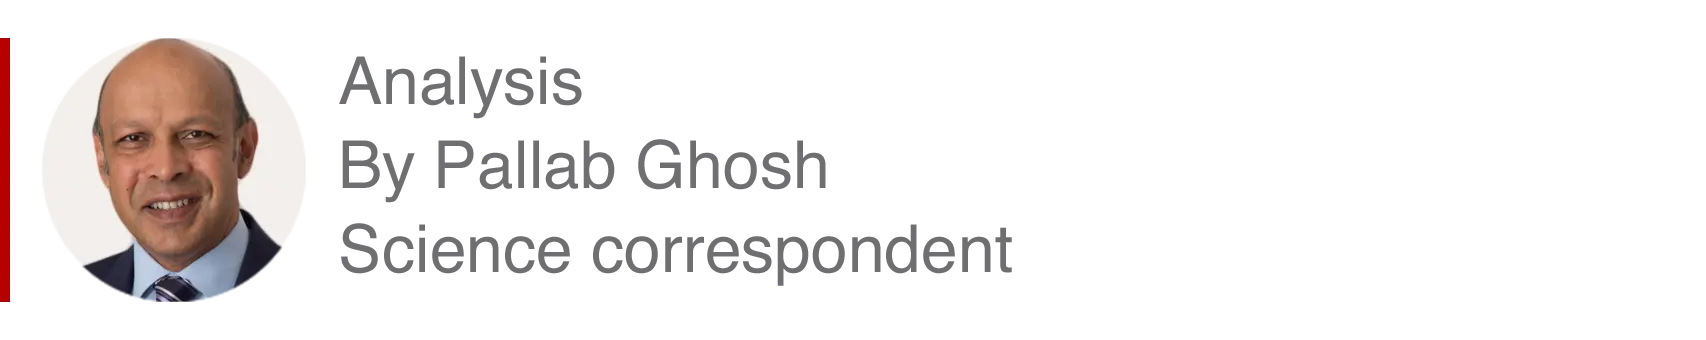 Analysis box by Pallab Ghosh, science correspondent